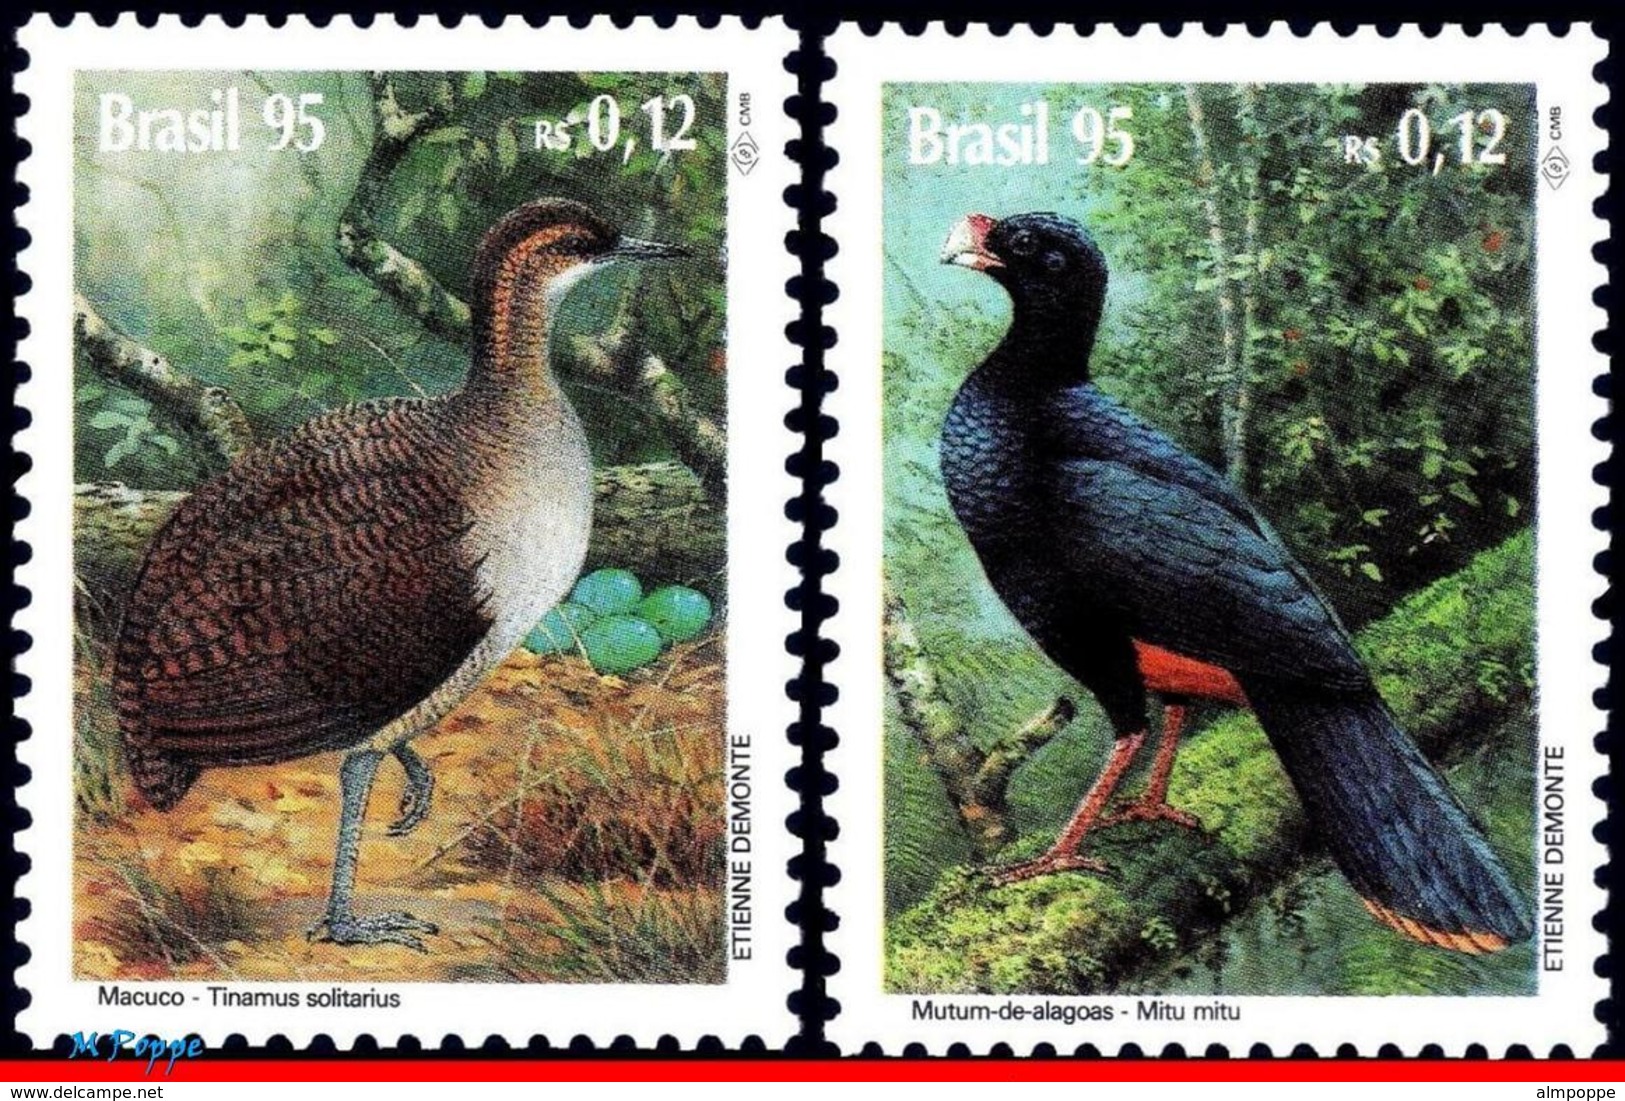 Ref. BR-2535-36 BRAZIL 1995 ANIMALS, FAUNA, ENDANGERED BIRDS,, CURASSOW, MI# 2644-45, SET MNH 2V Sc# 2535-2356 - Gallinacées & Faisans